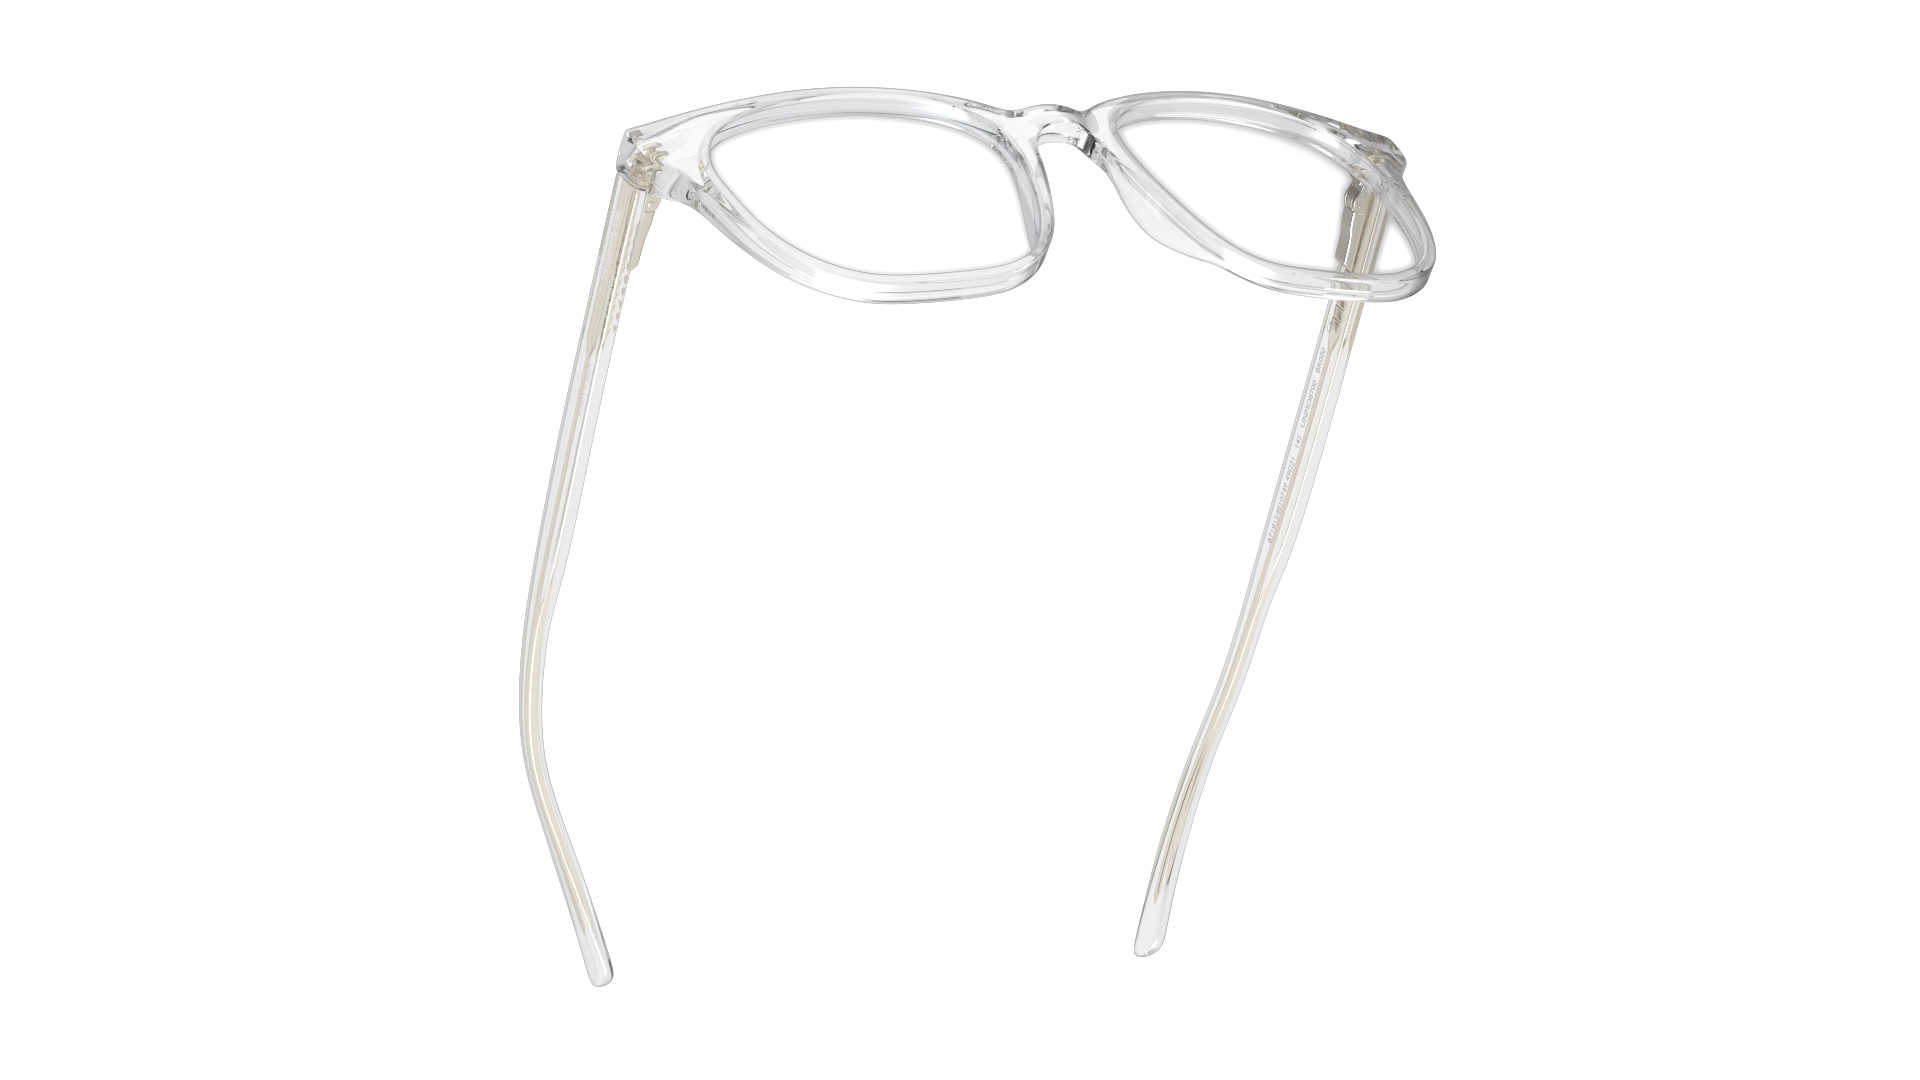 Bottom_Up Unofficial UNOM0225 Glasses Transparent / Transparent, Clear